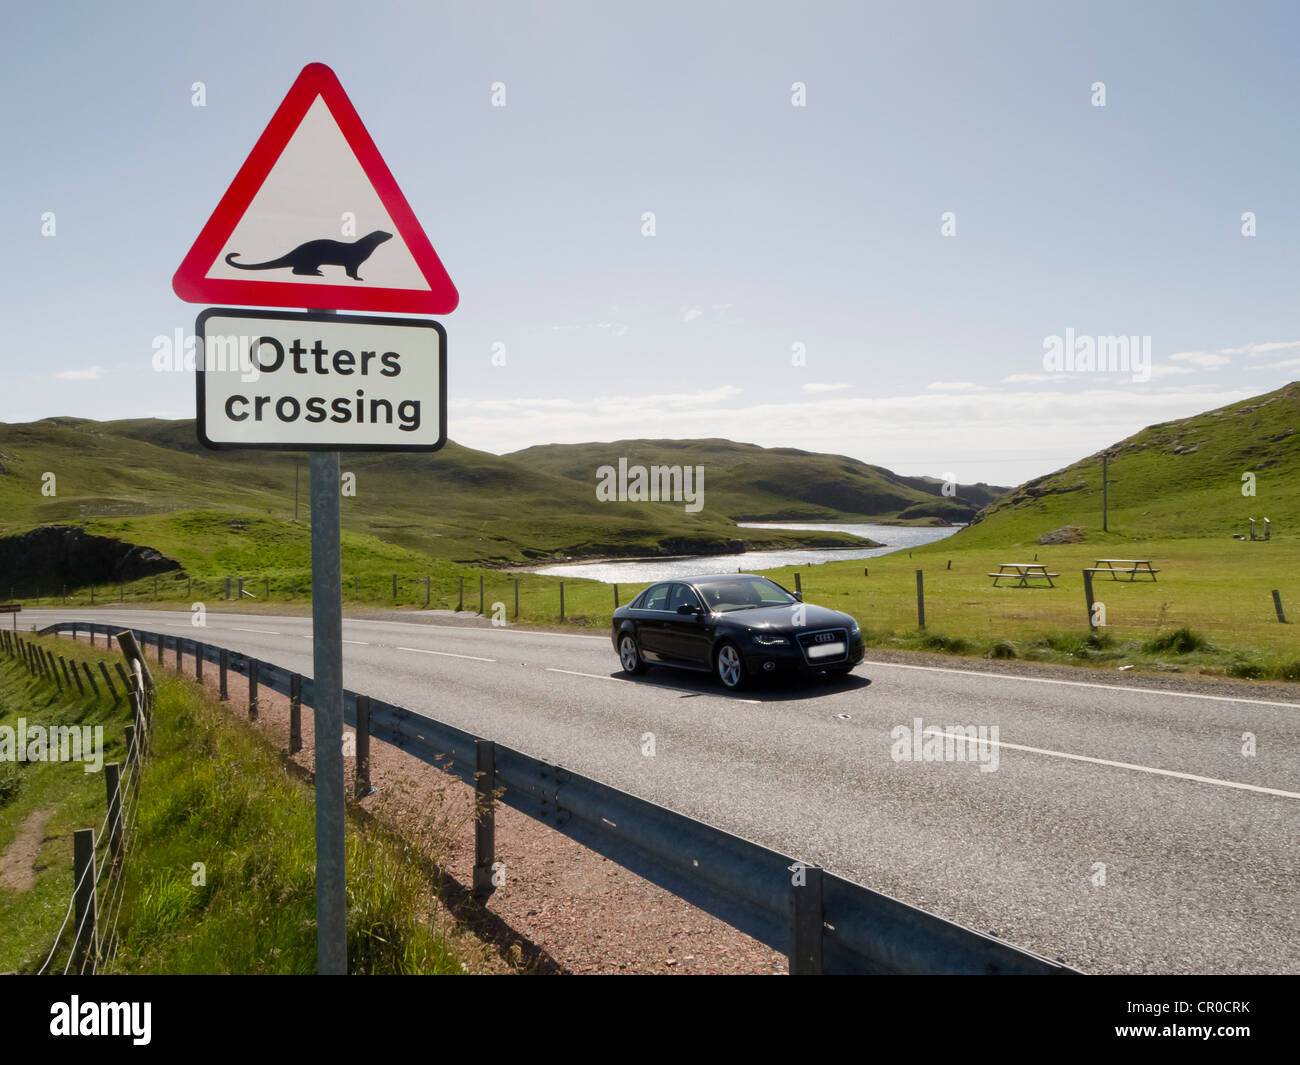 'Otters crossing' warning road sign at Mavis Grind, Shetland Islands. June 2010. Stock Photo